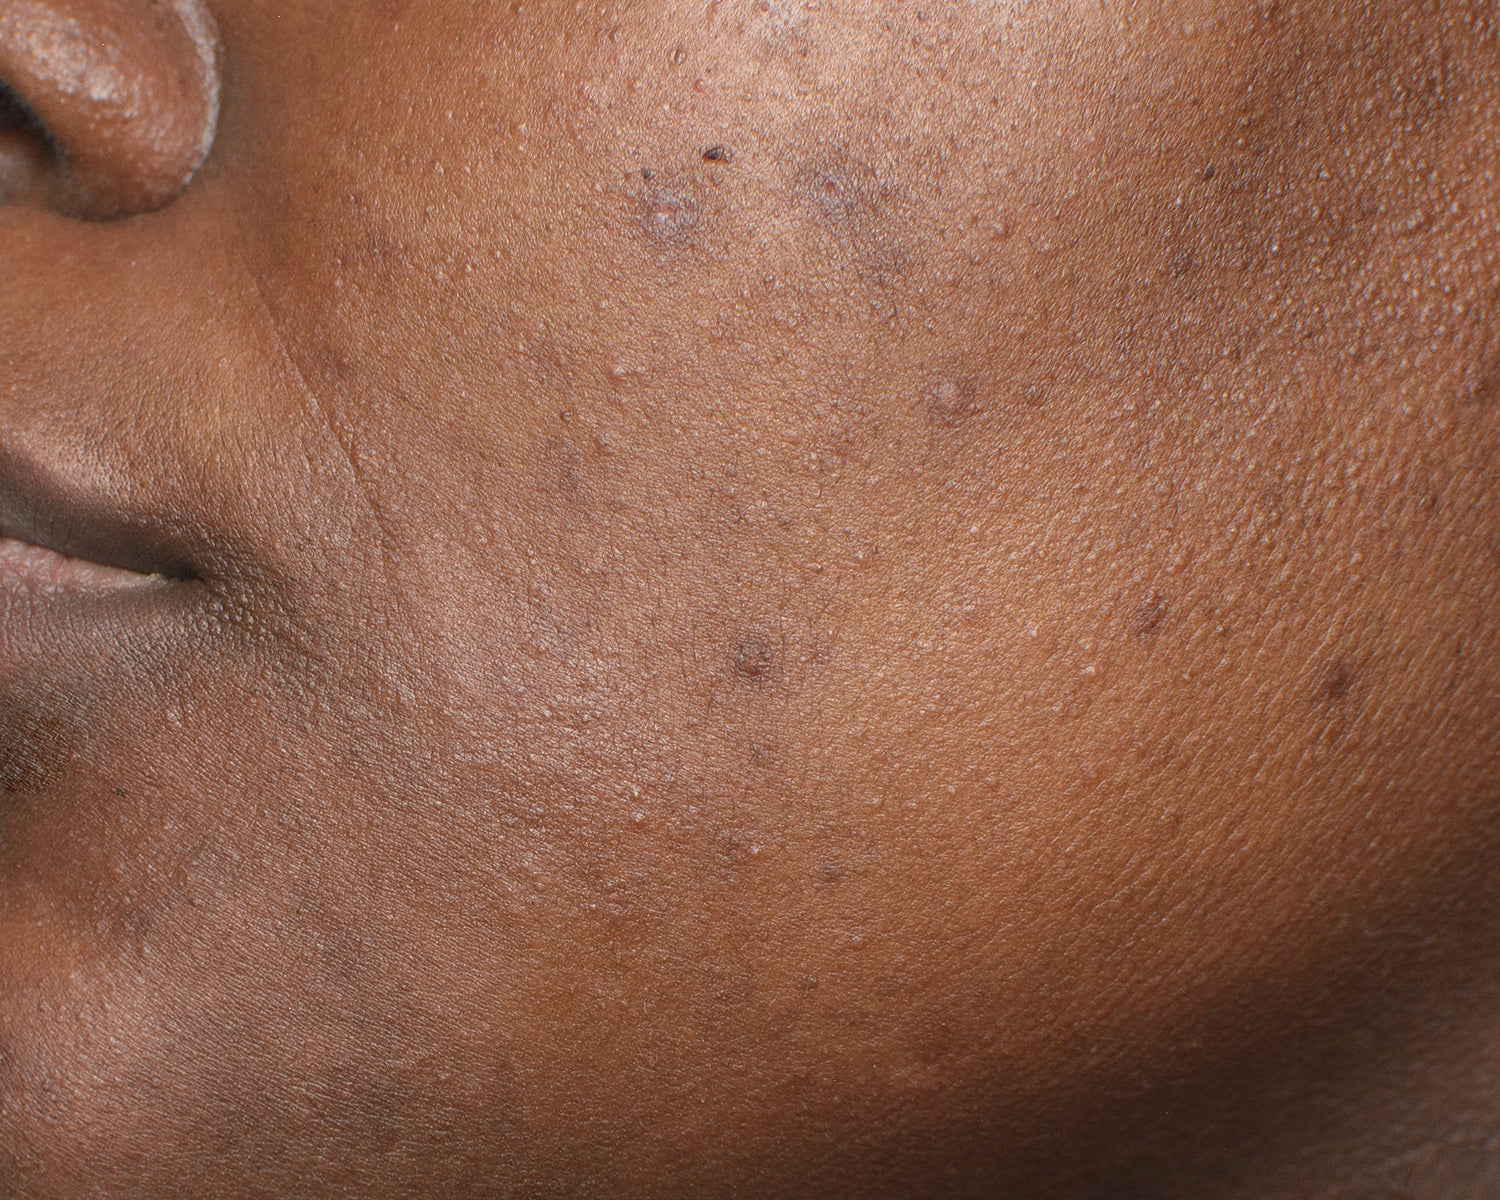 Get rid of dark spots and hyperpigmentation